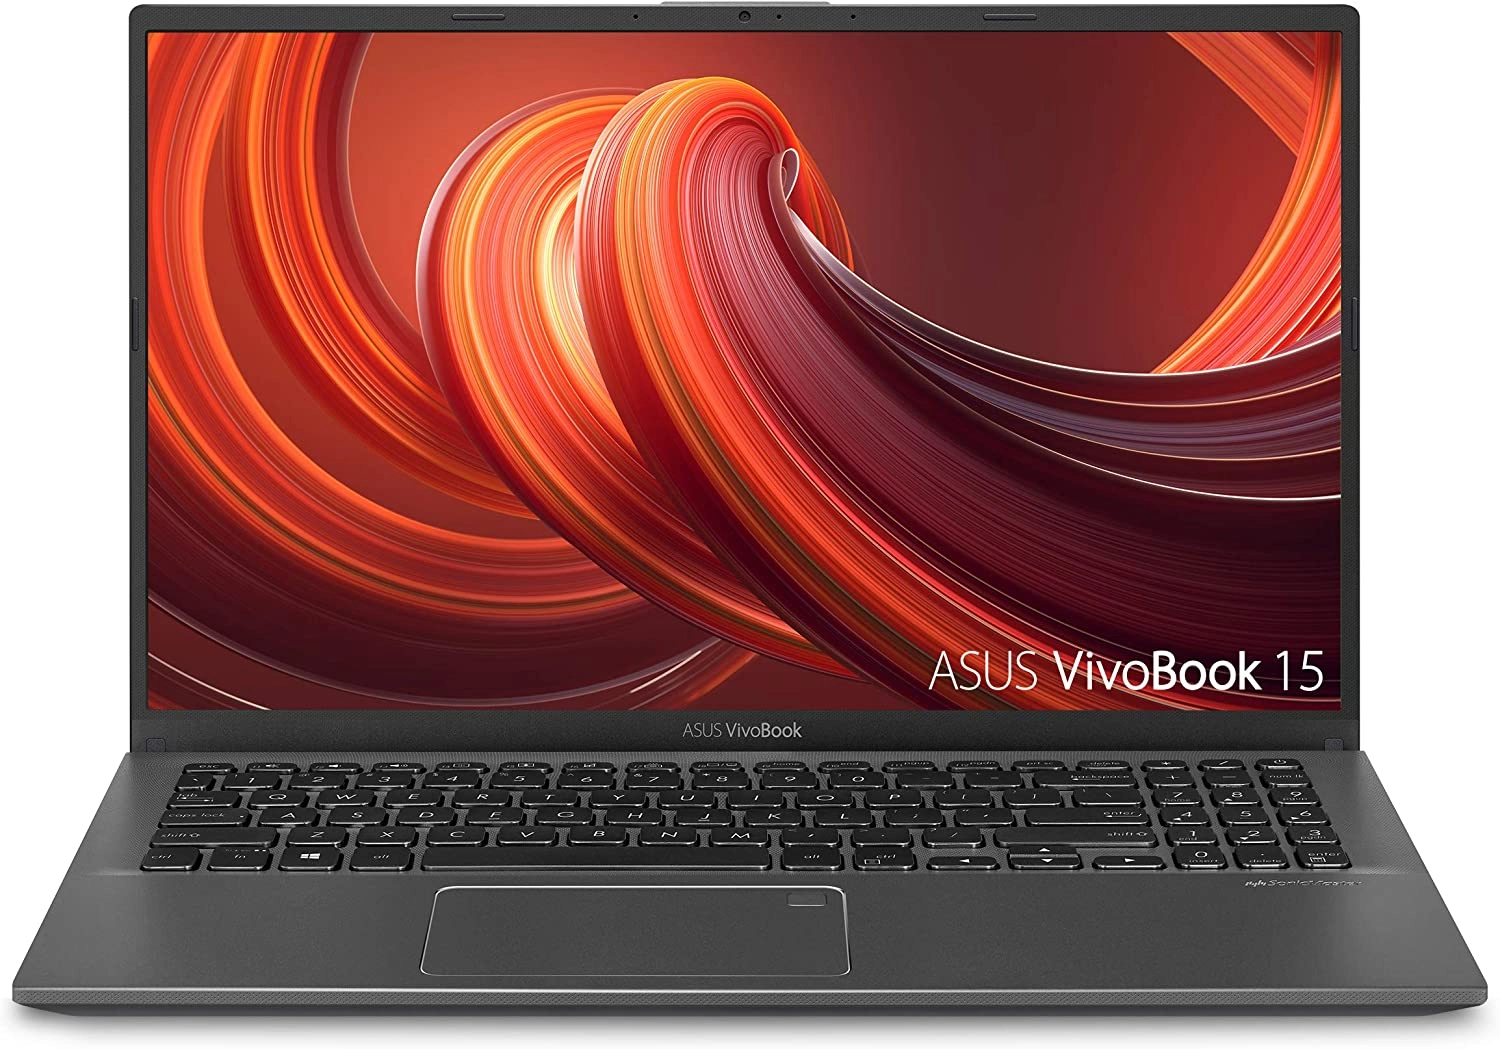 ASUS VivoBook F512DA laptop image